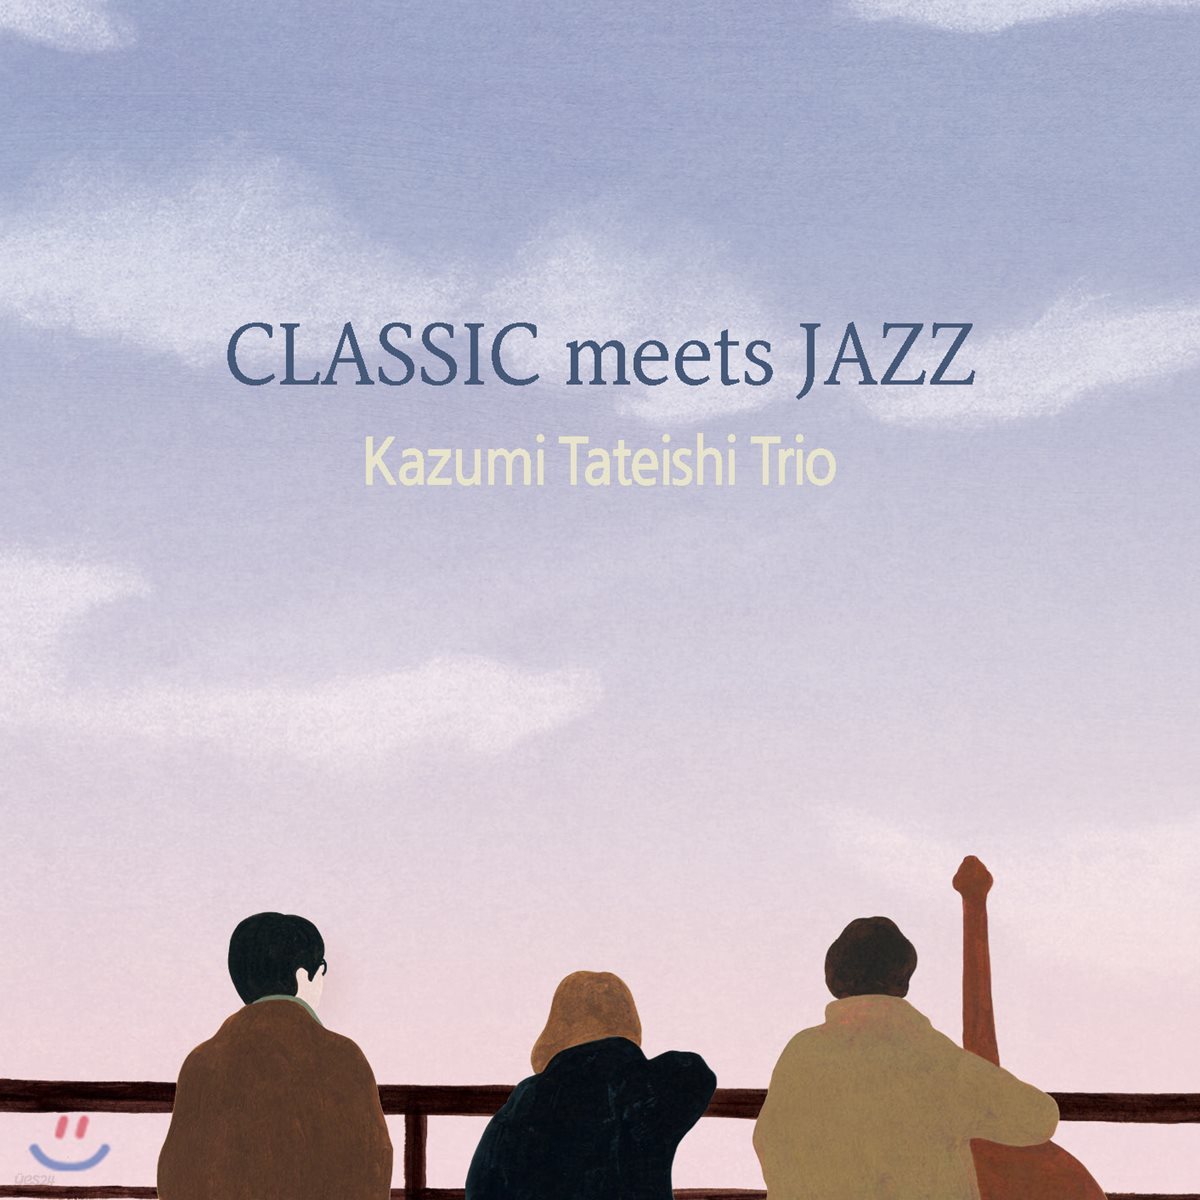 Kazumi Tateishi Trio - Classic Meets Jazz 카즈미 타테이시 트리오가 연주하는 클래식